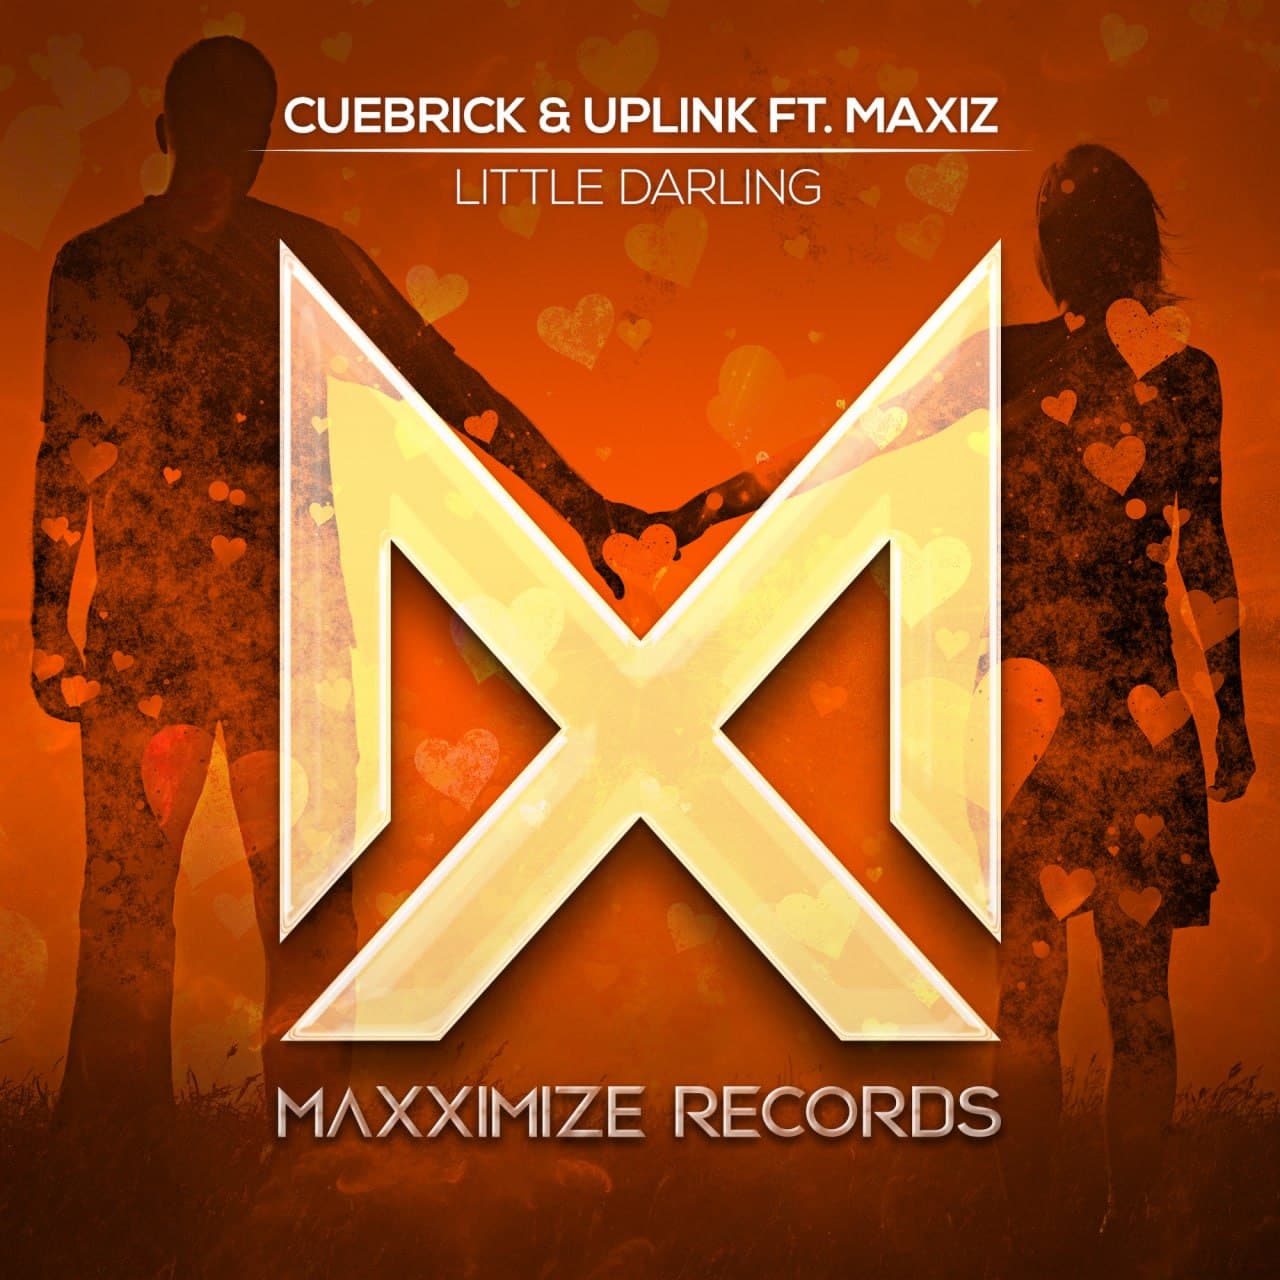 Cuebrick & Uplink, Maxiz - Little Darling (Extended Mix)